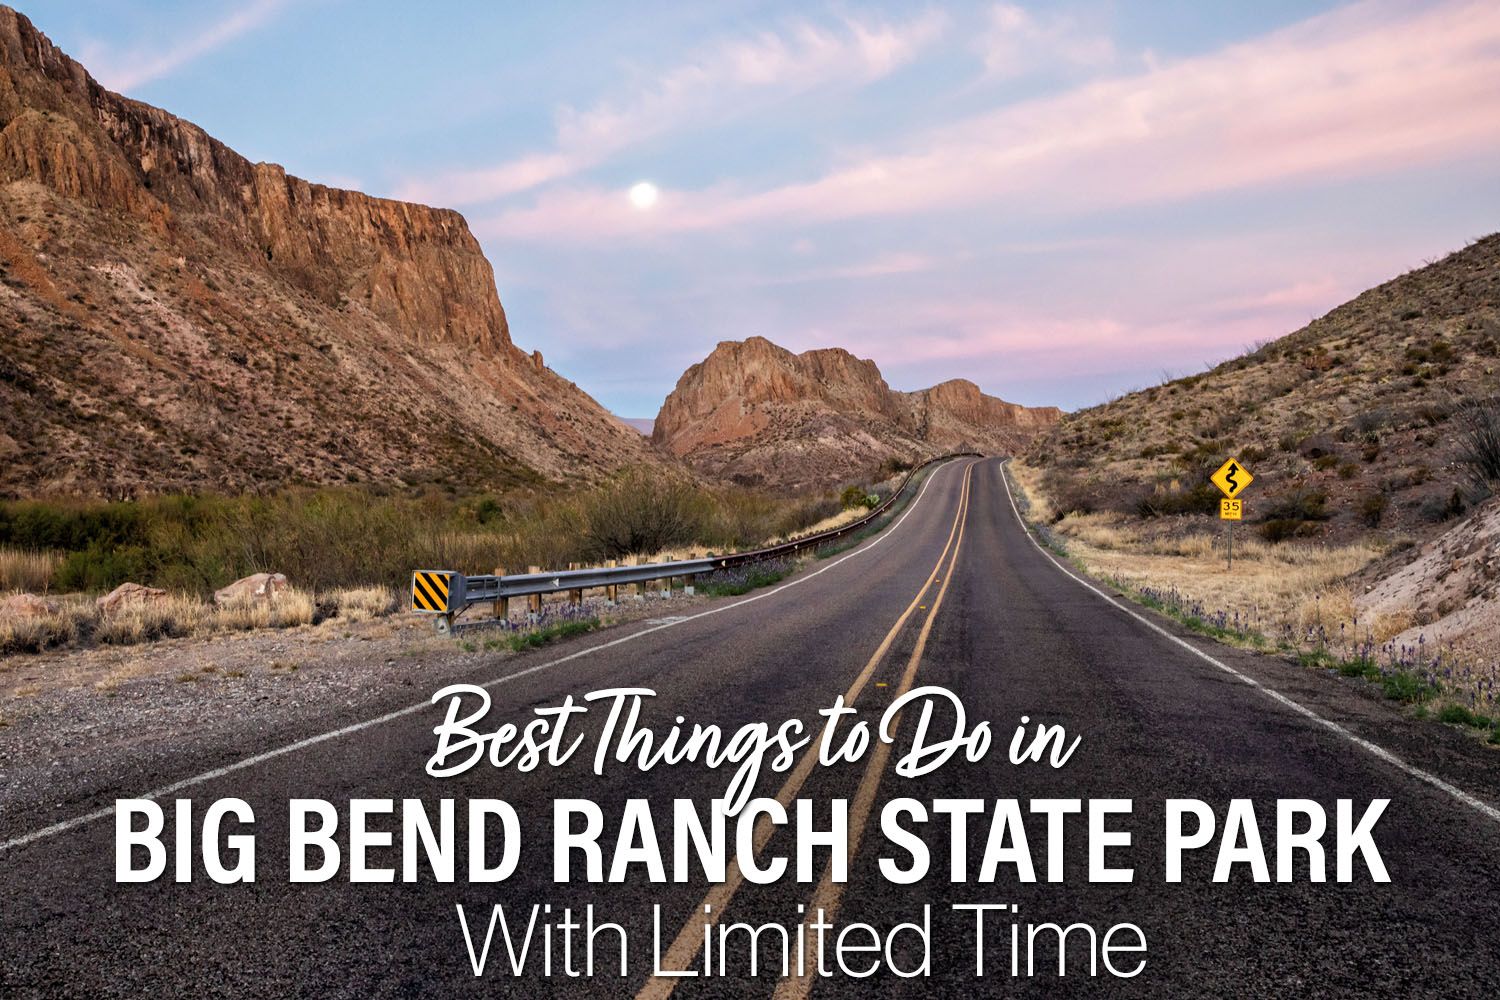 Big Bend Ranch State Park